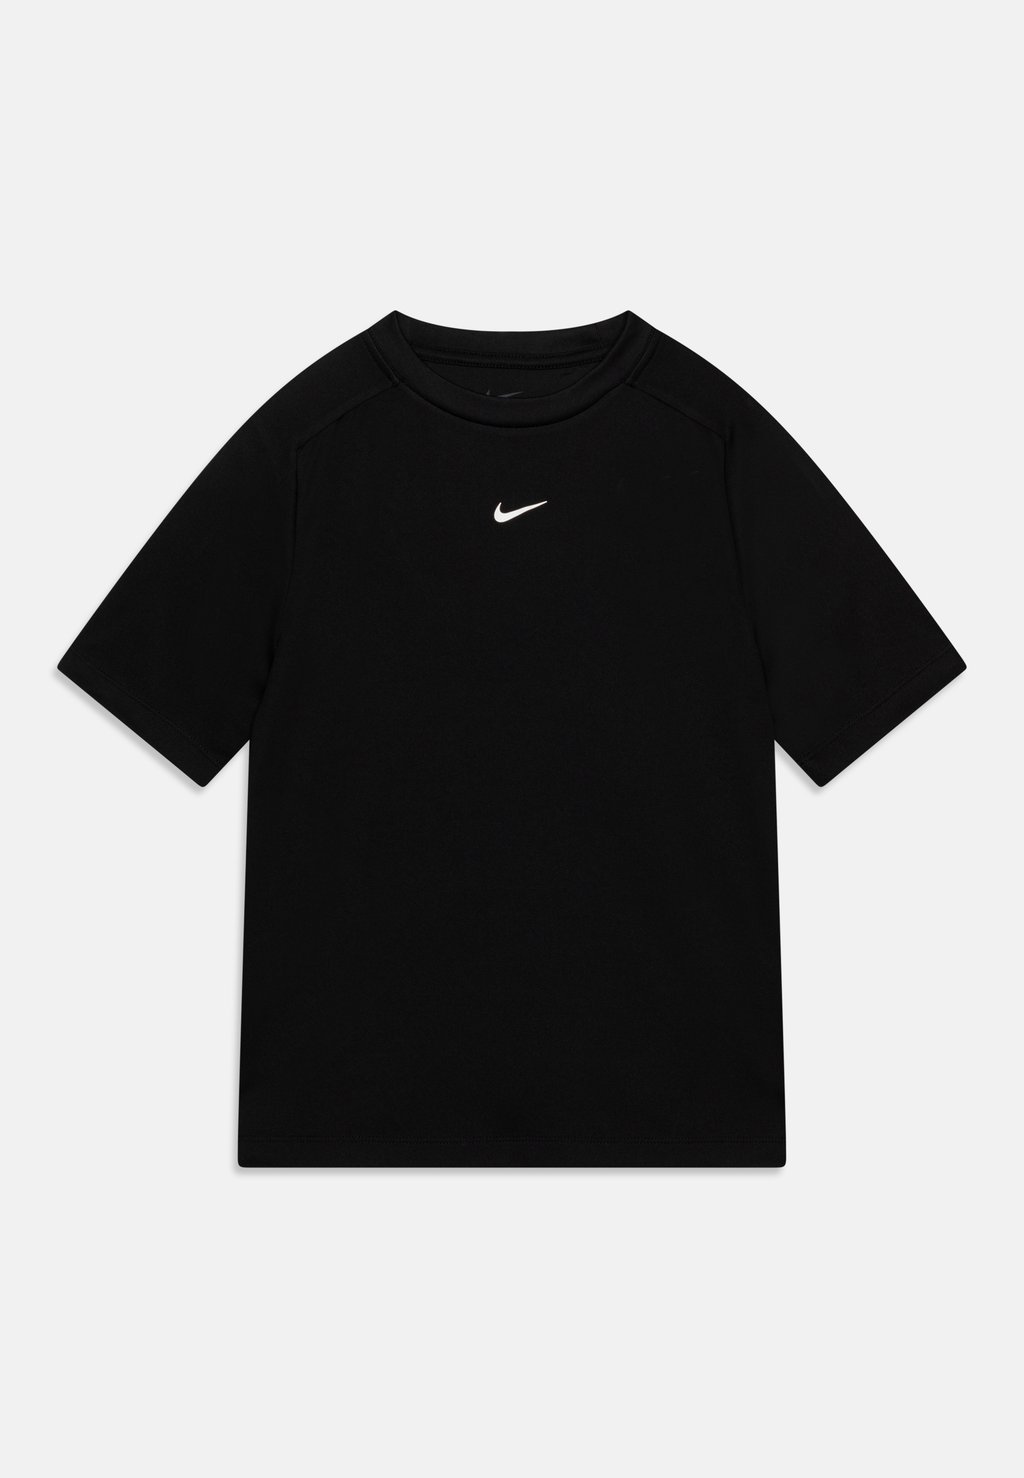 Спортивная футболка Df Multi Unisex Nike, цвет black/white спортивная футболка df unisex nike цвет university red white